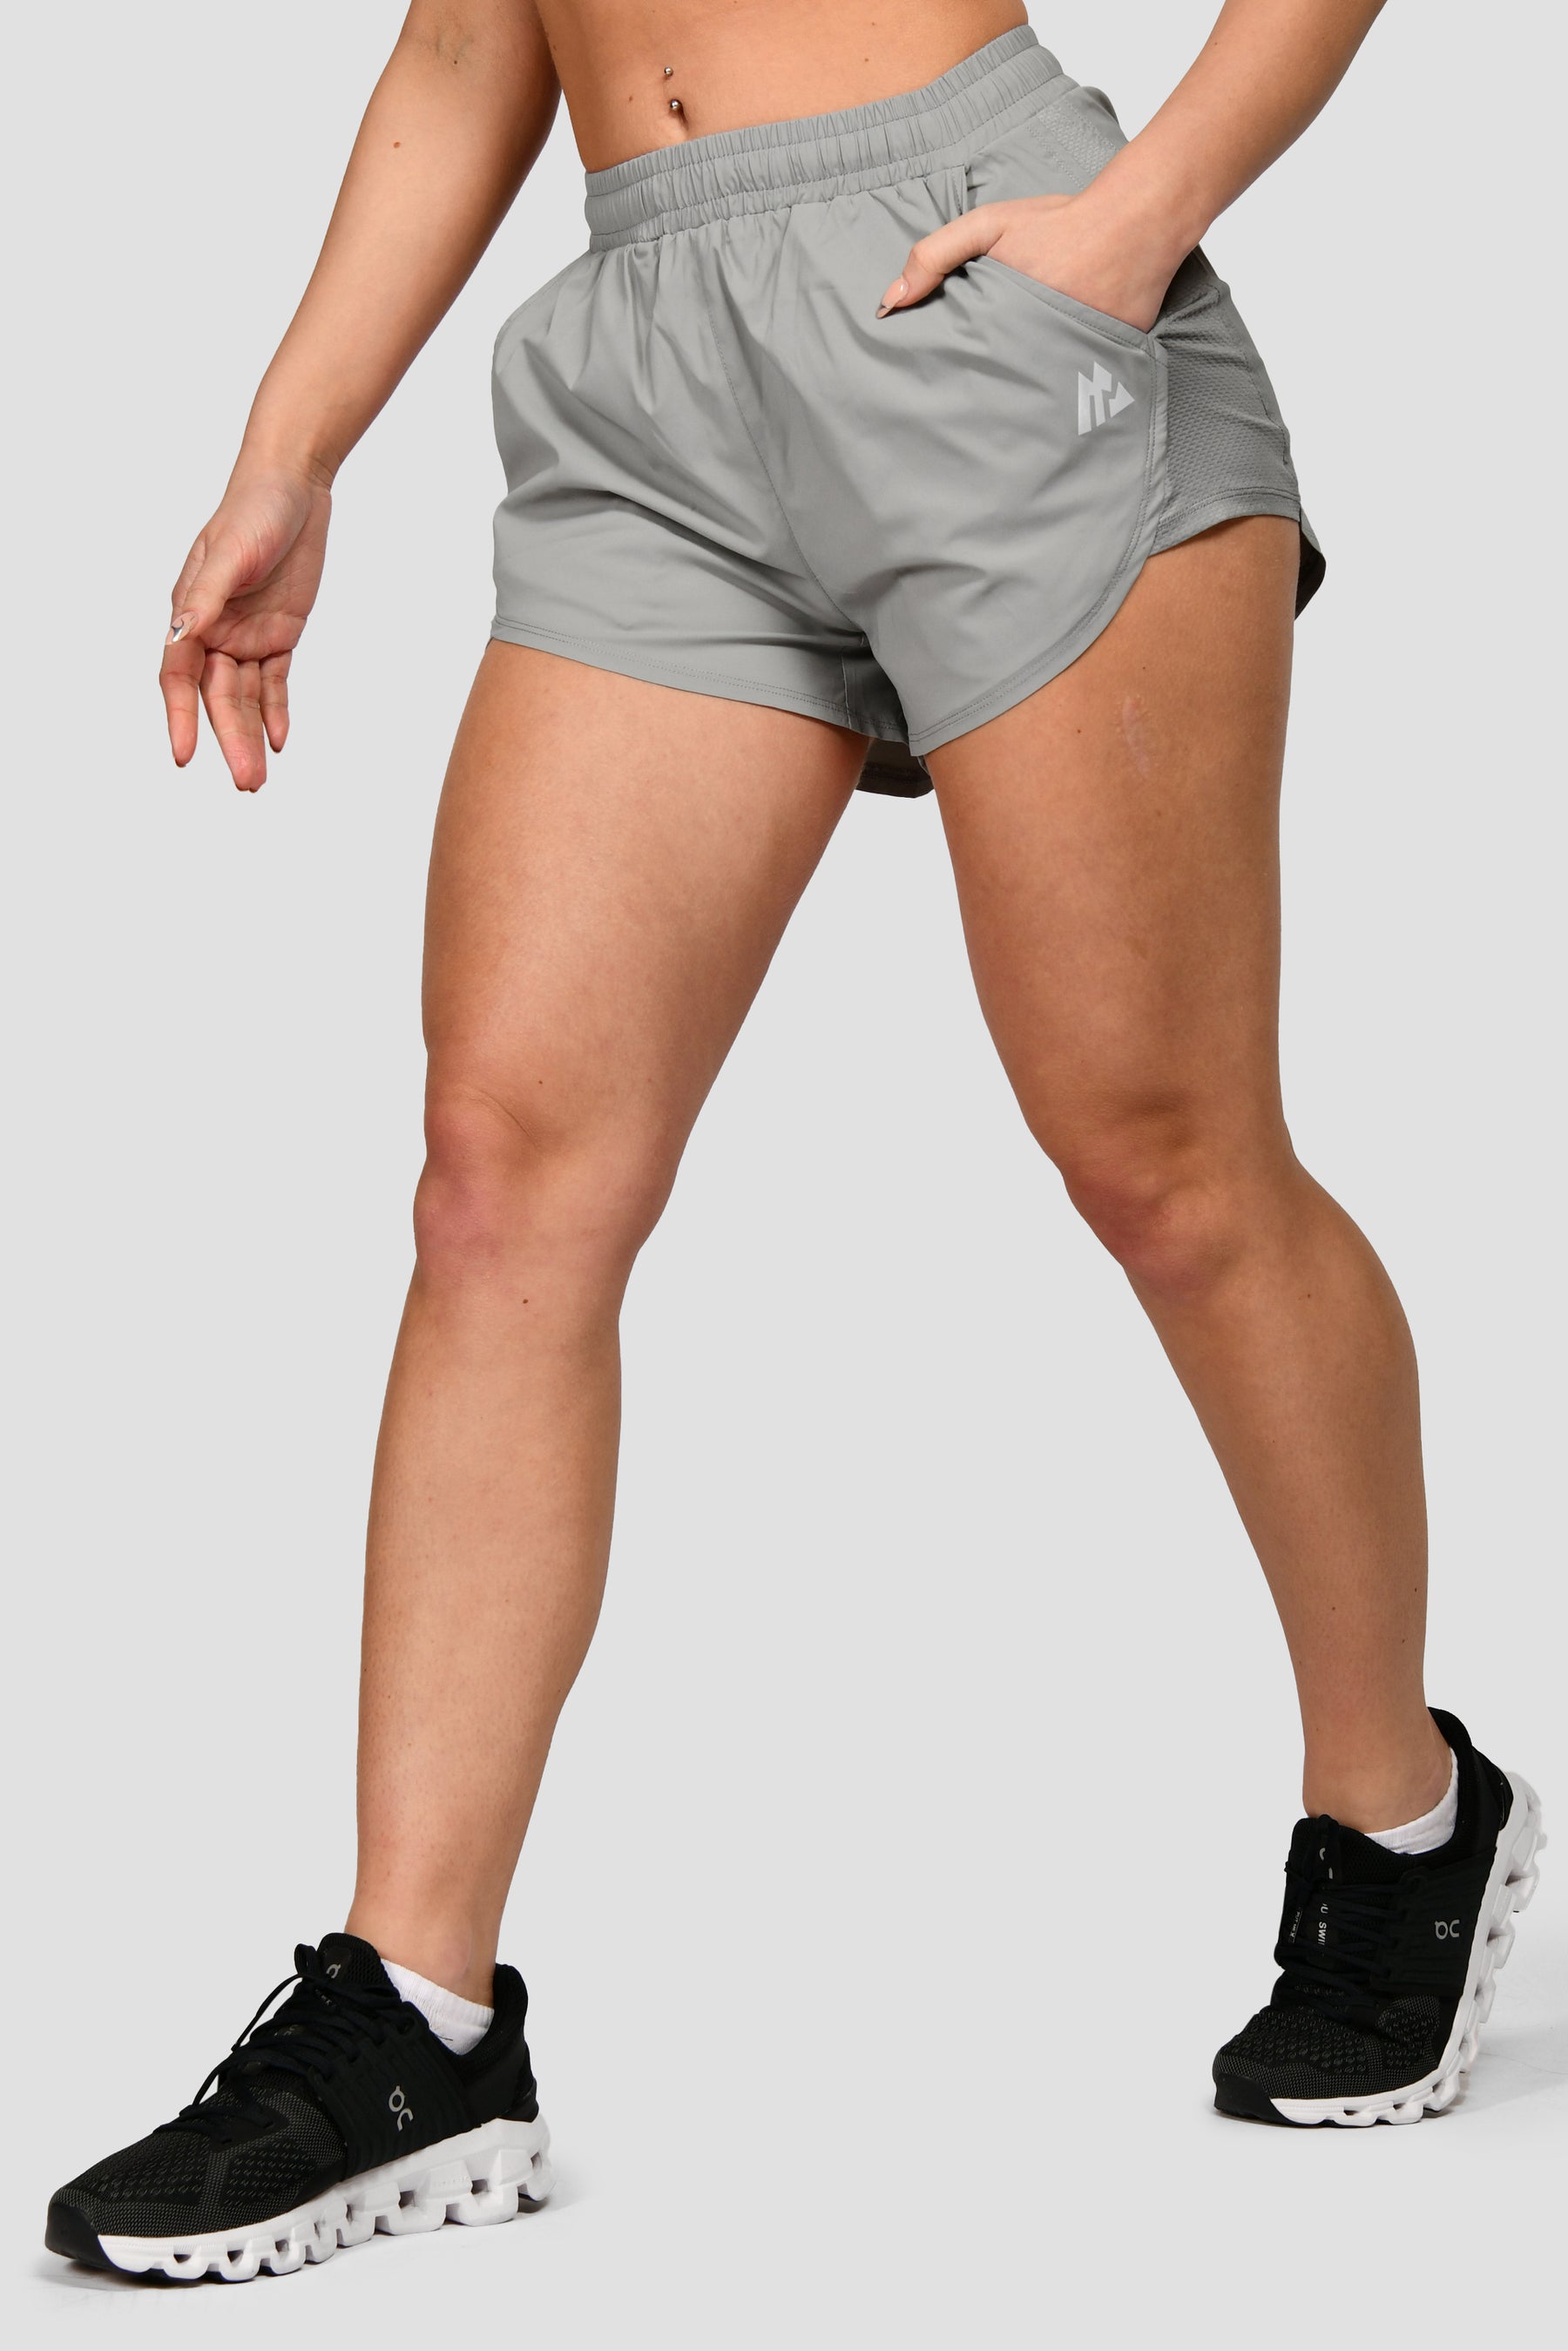 Women's Fly Short - Platinum Grey